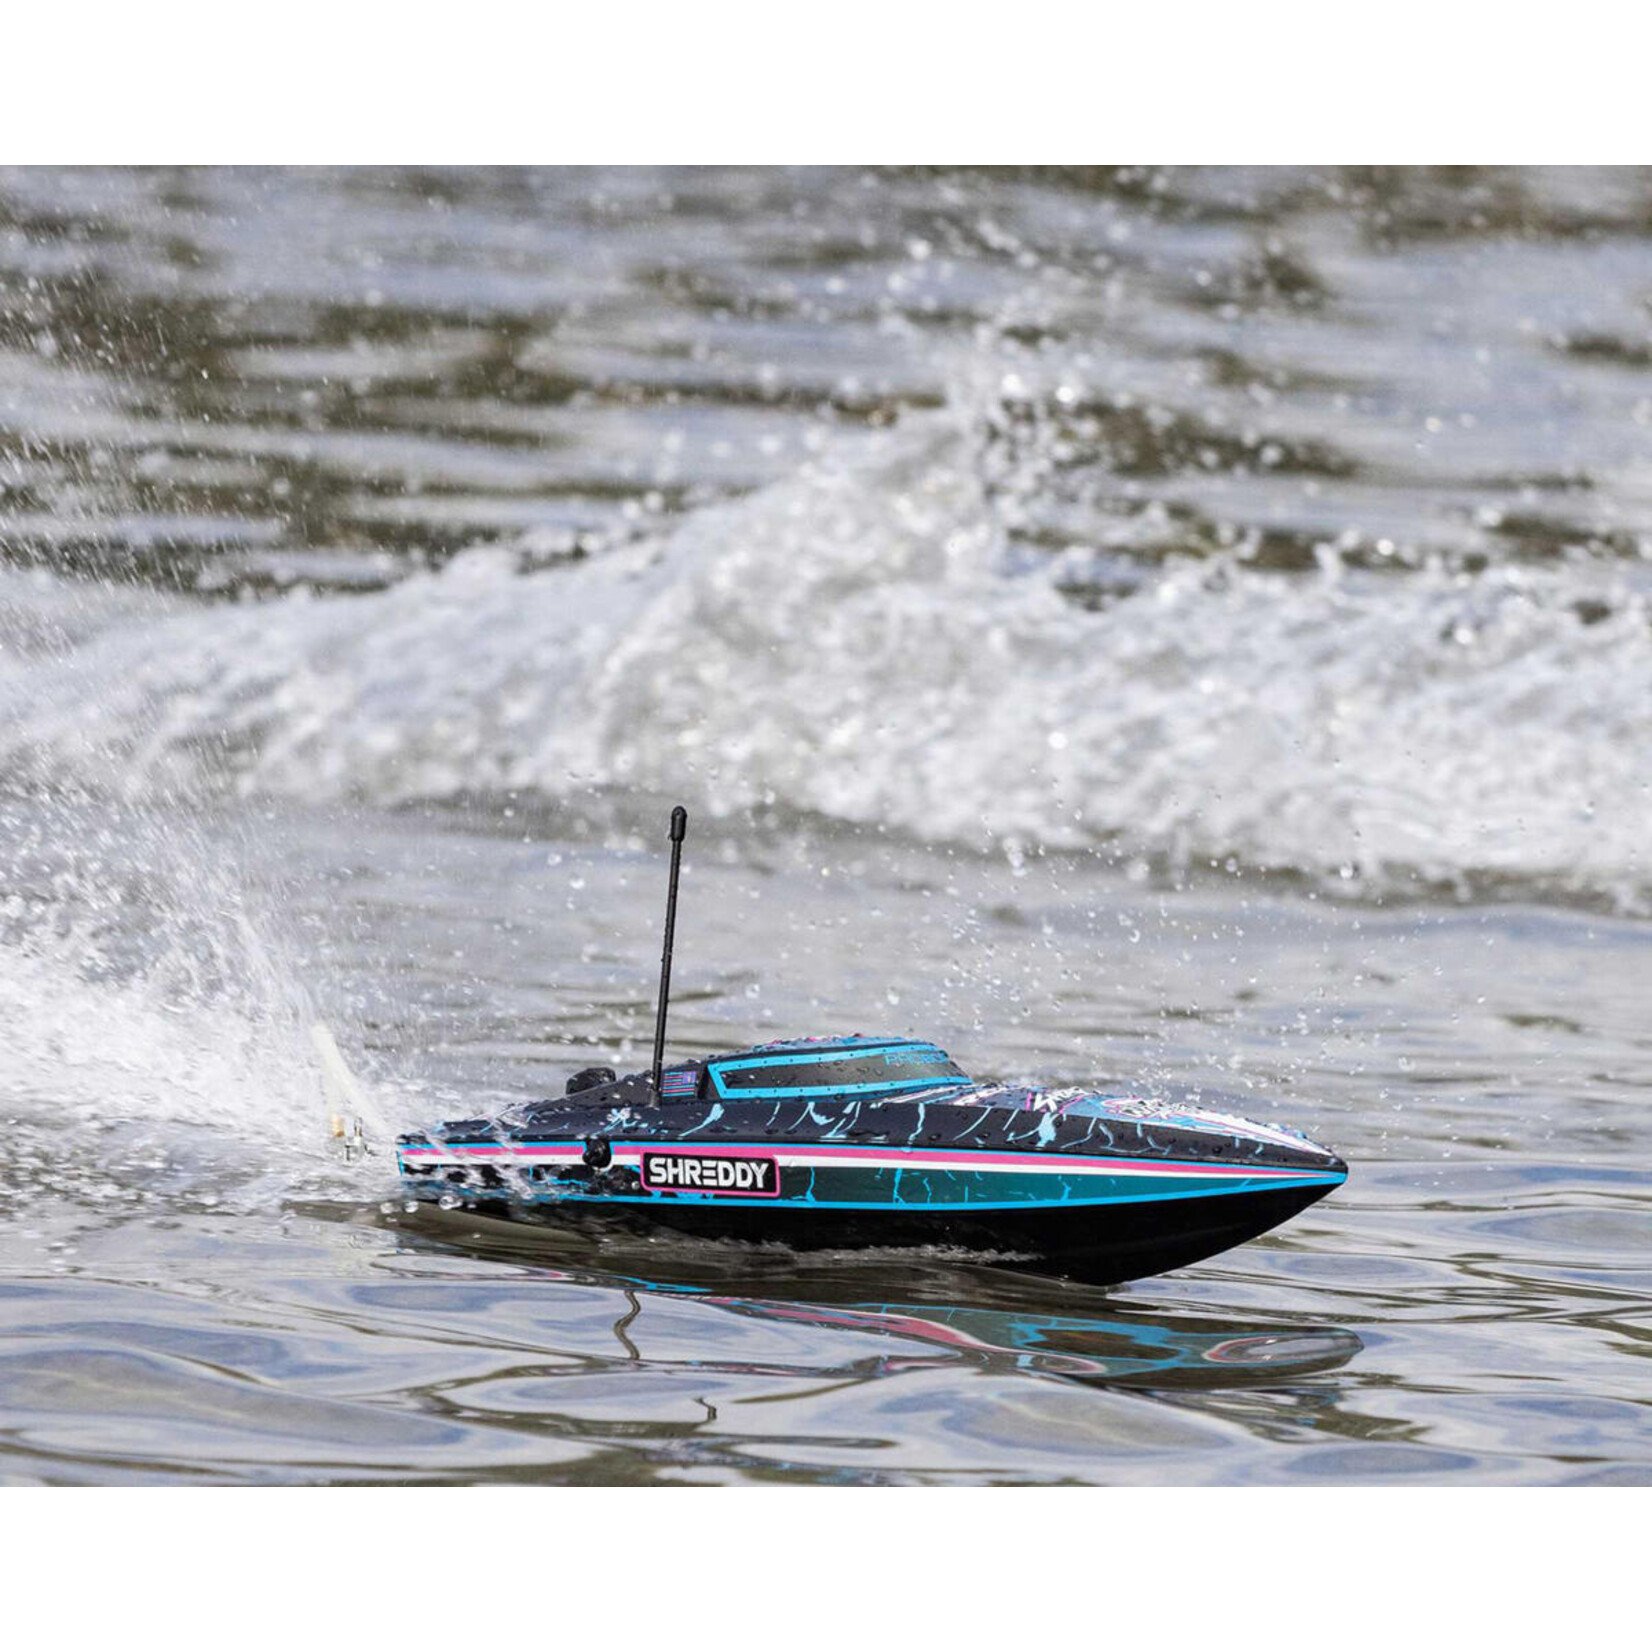 Pro Boat Pro Boat Recoil 2 18" Brushless Deep-V Self-Righting RTR Boat (Shreddy) w/2.4GHz Radio #PRB08053T1